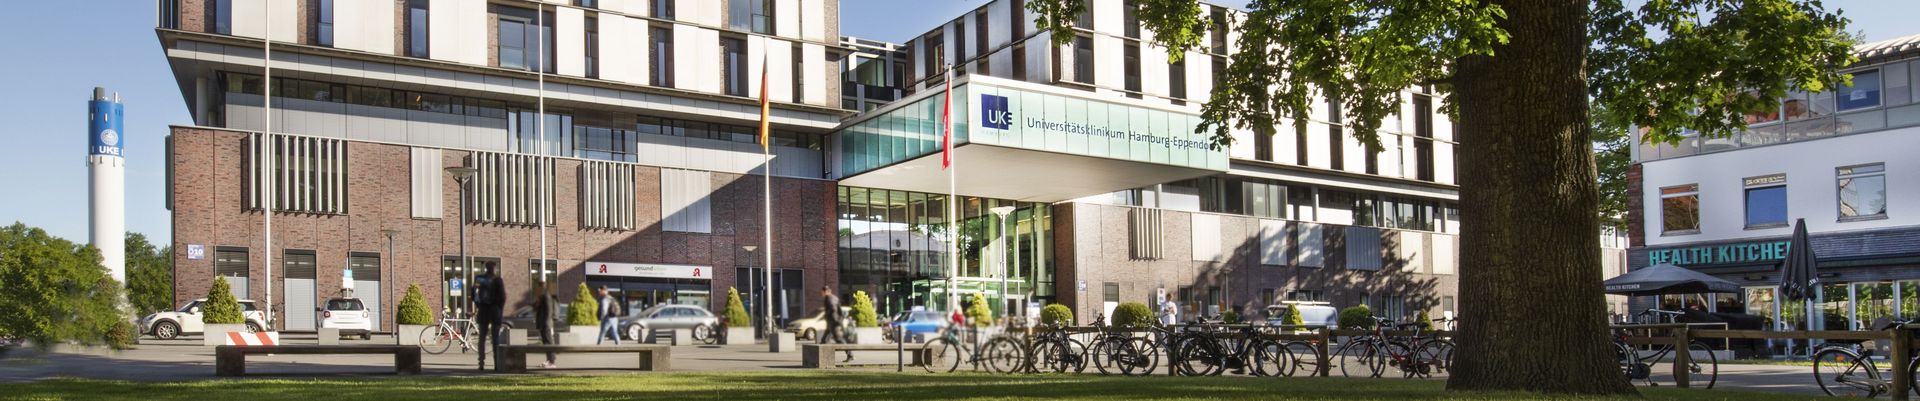 Universitätsklimikum Hamburg Eppendorf mit International Office